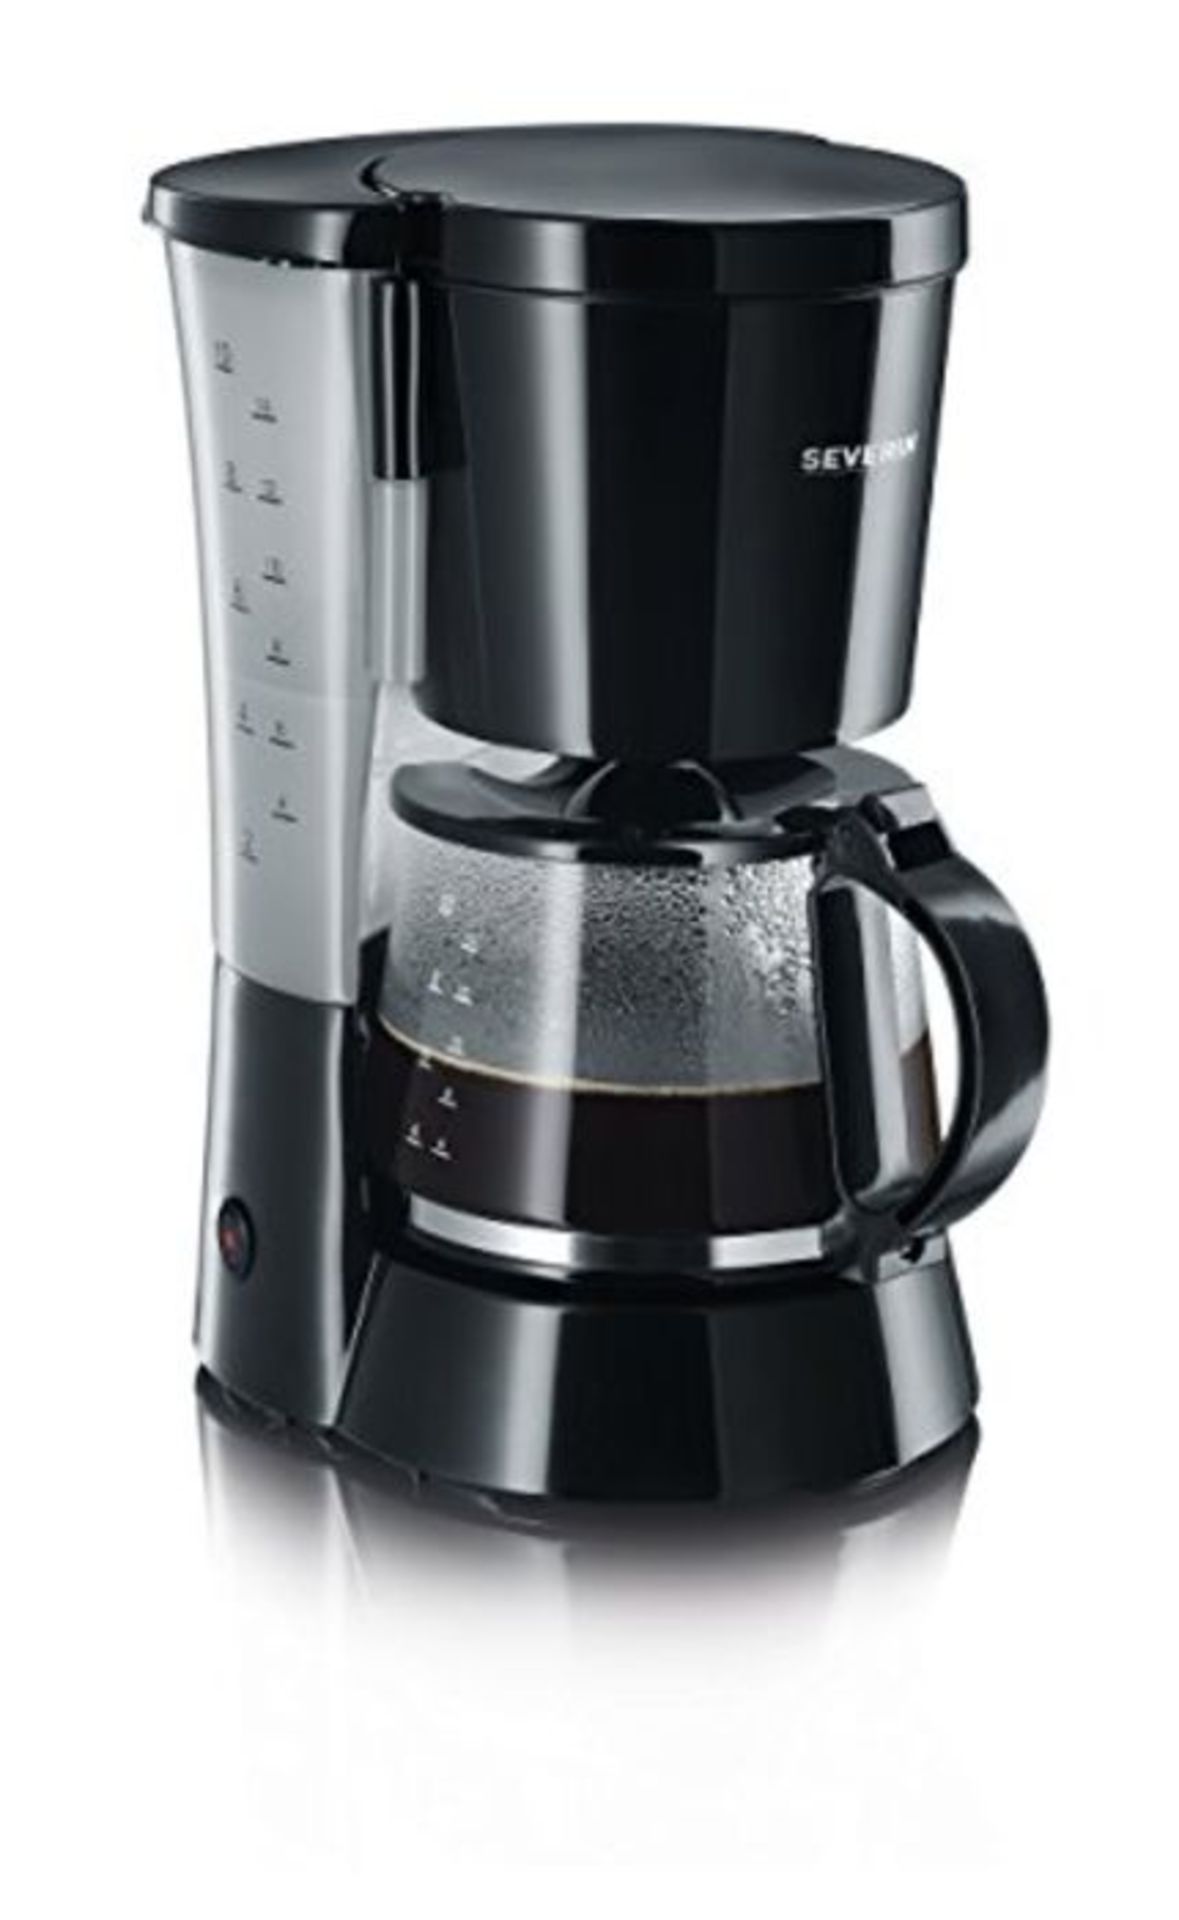 Severin Coffee Maker with 800 W of Power KA 4479, Black